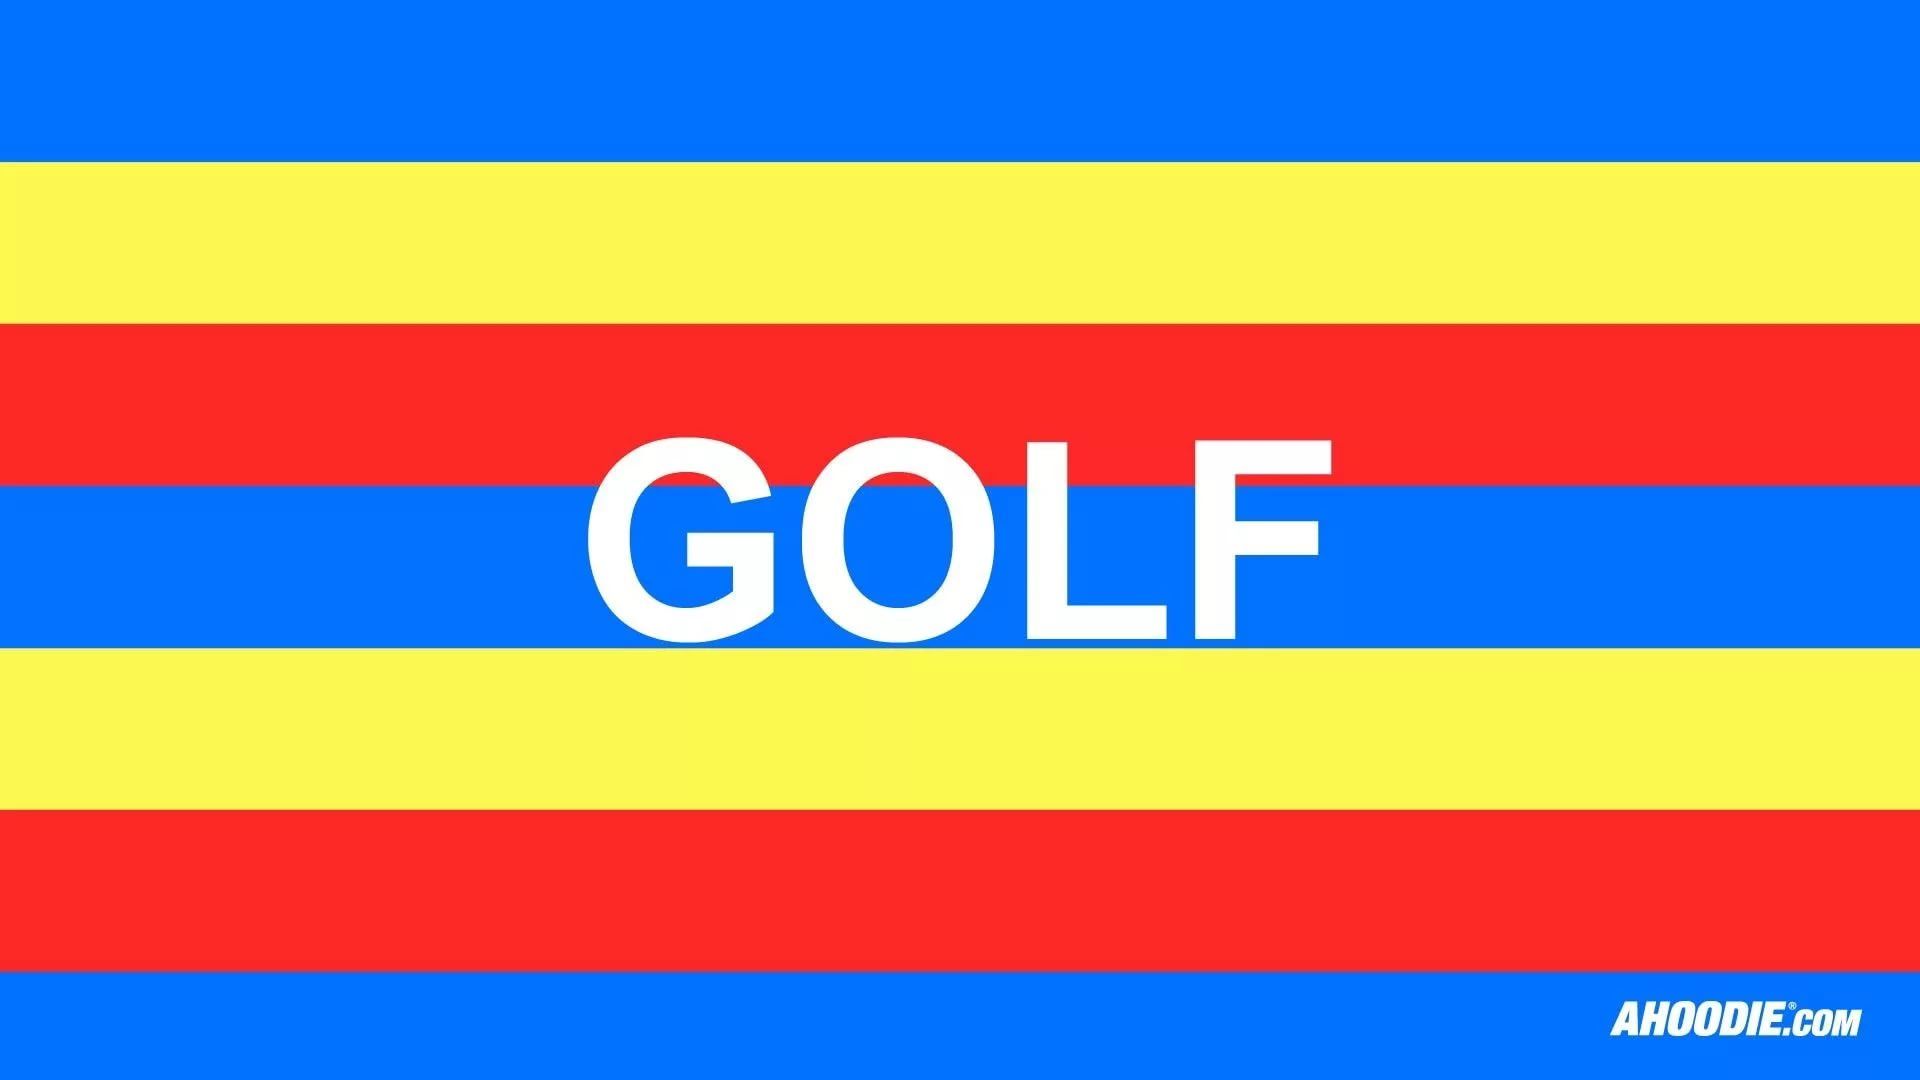 Golf Wang Wallpaper: Image, Category